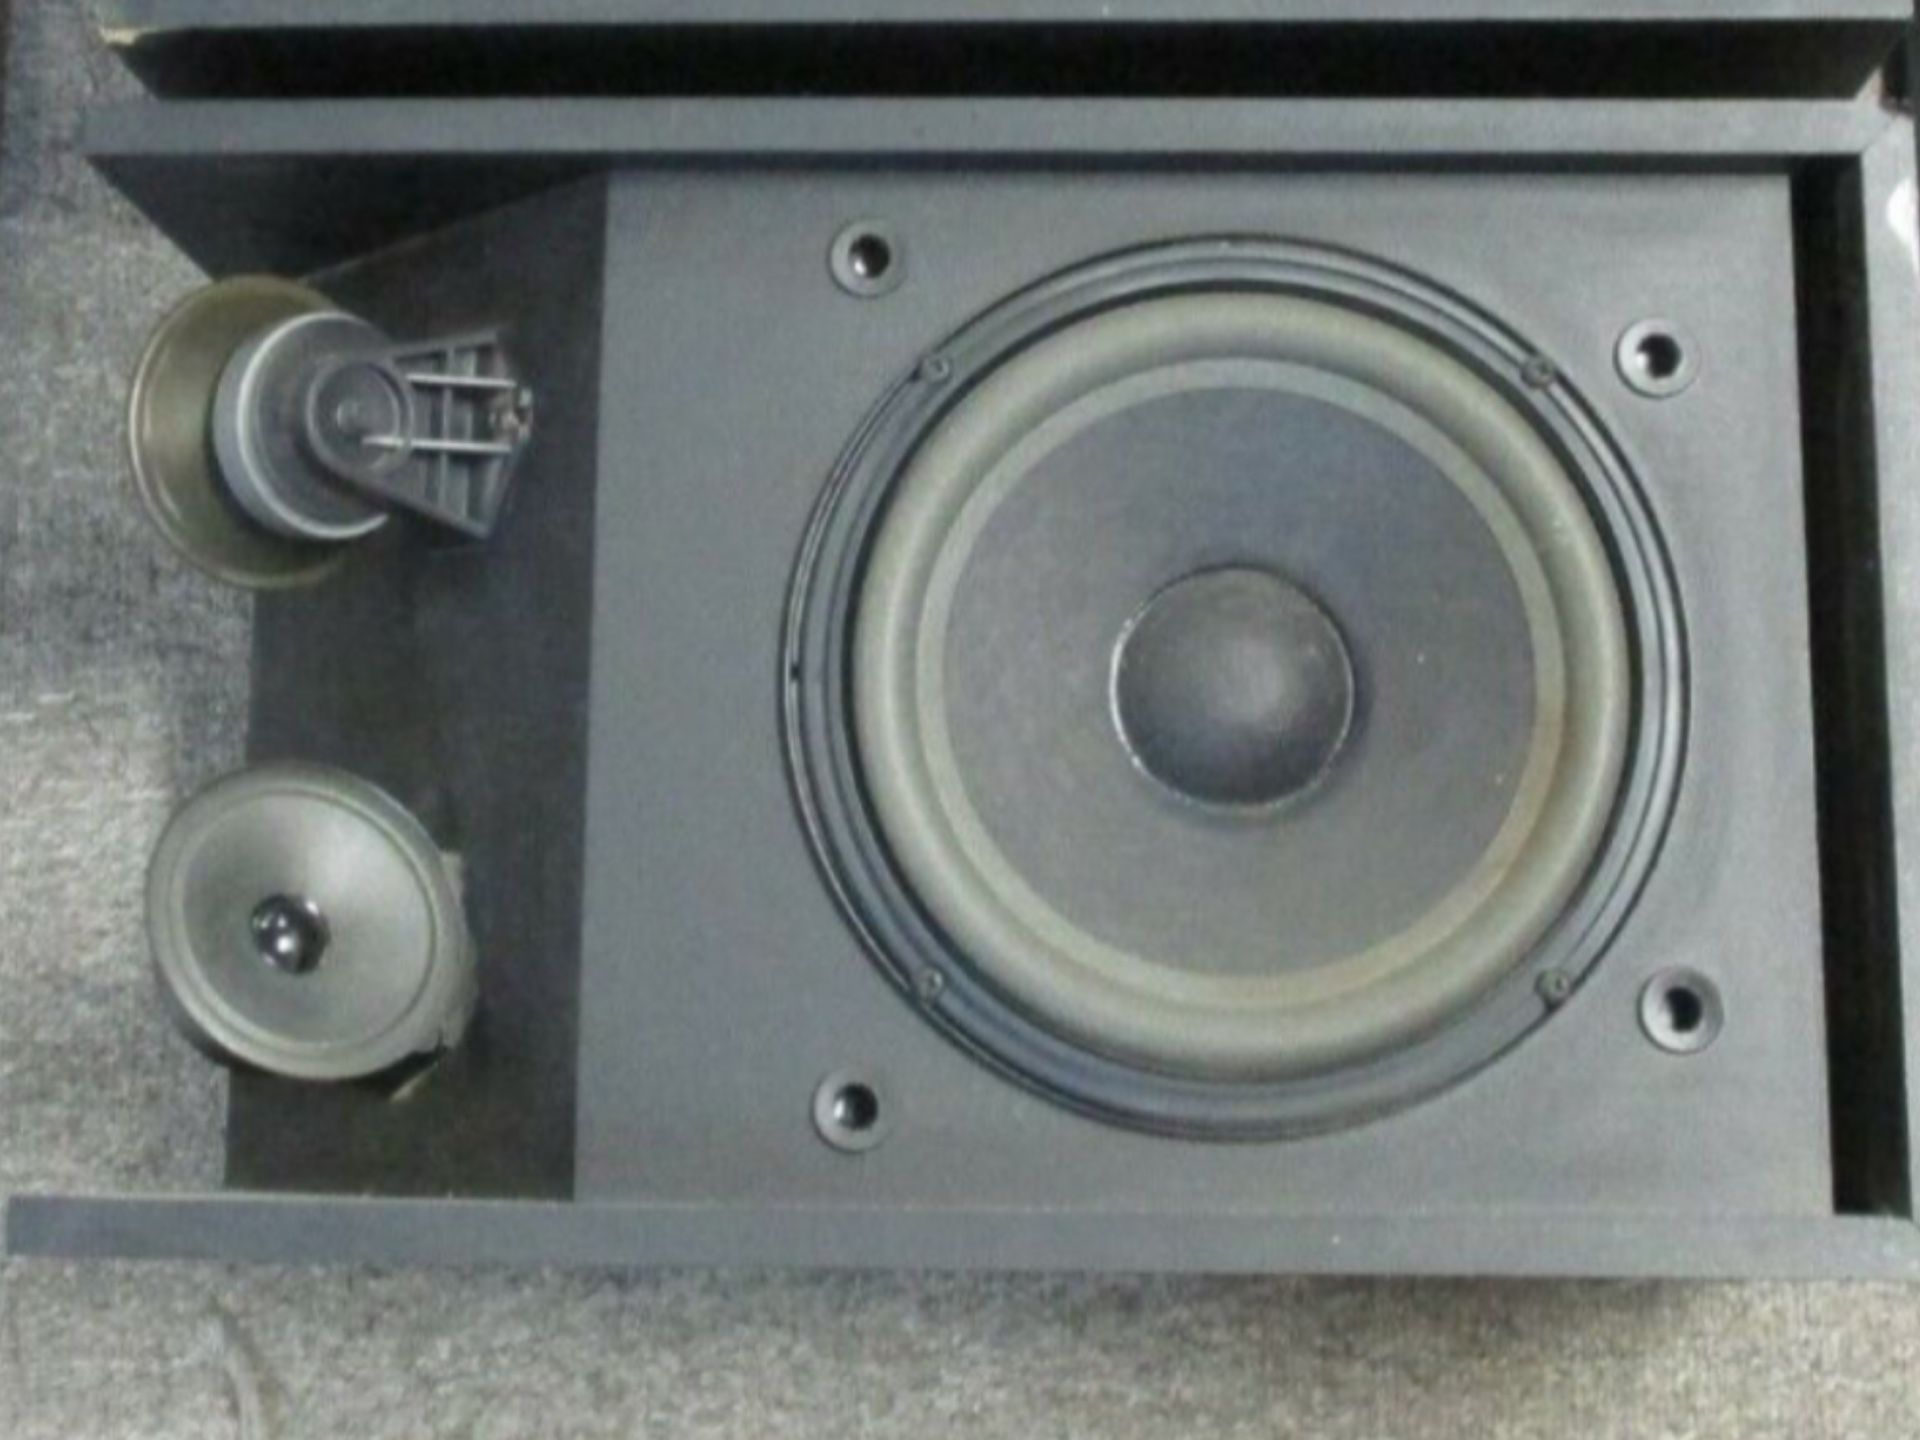 1 one bose 301 series II speaker working tested